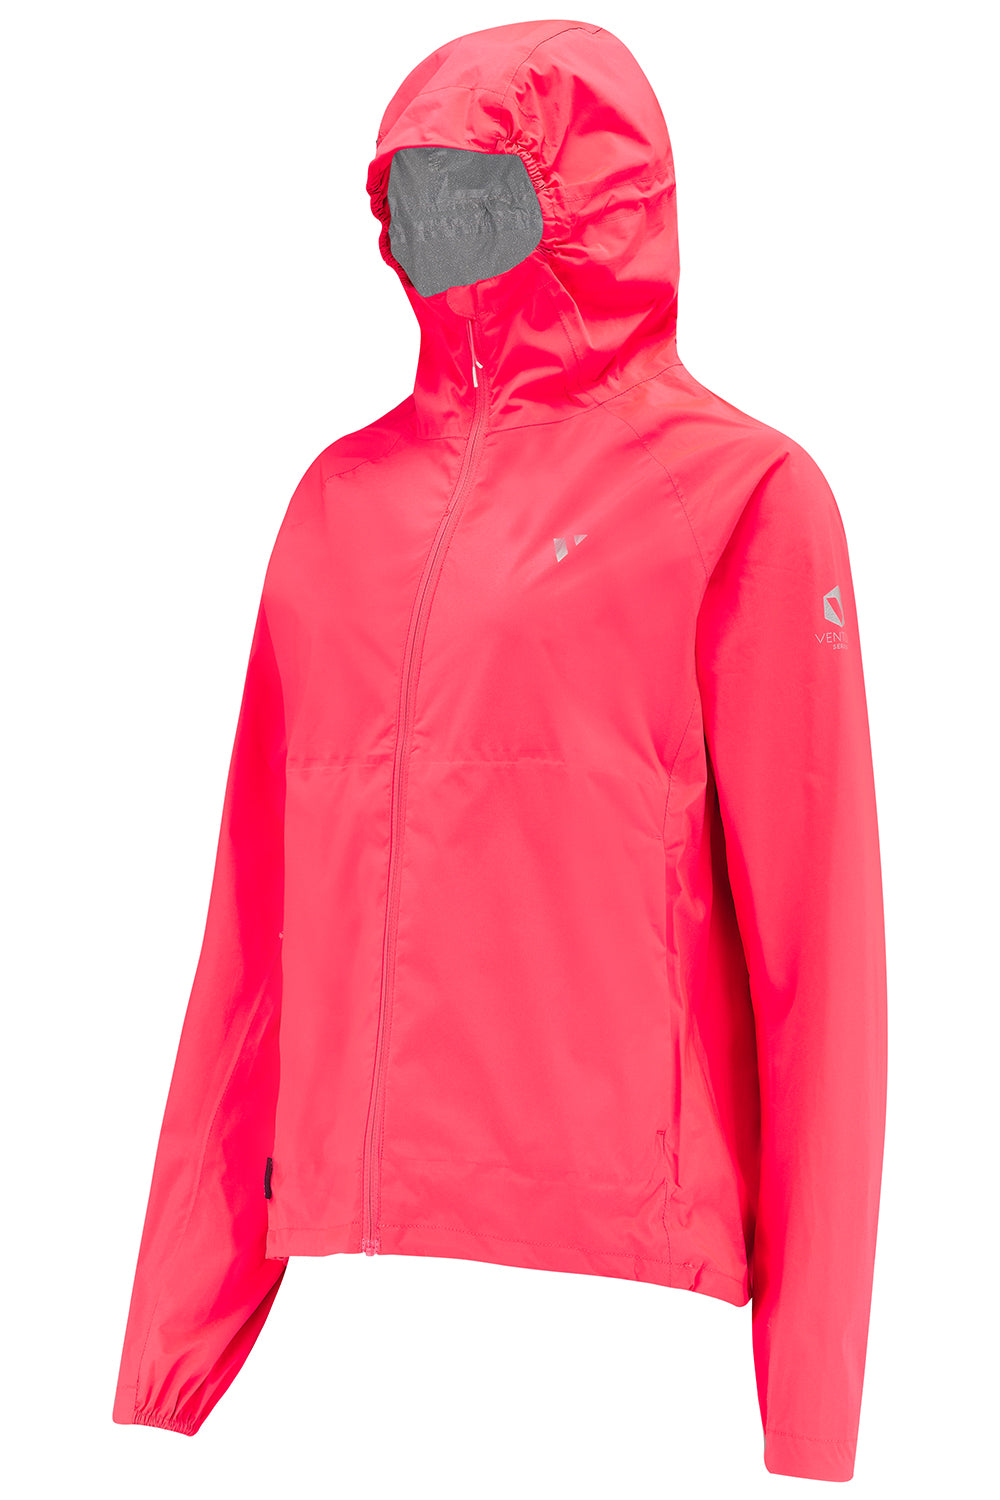 Ultralite -  Women's Running Jacket - Neon Watermelon